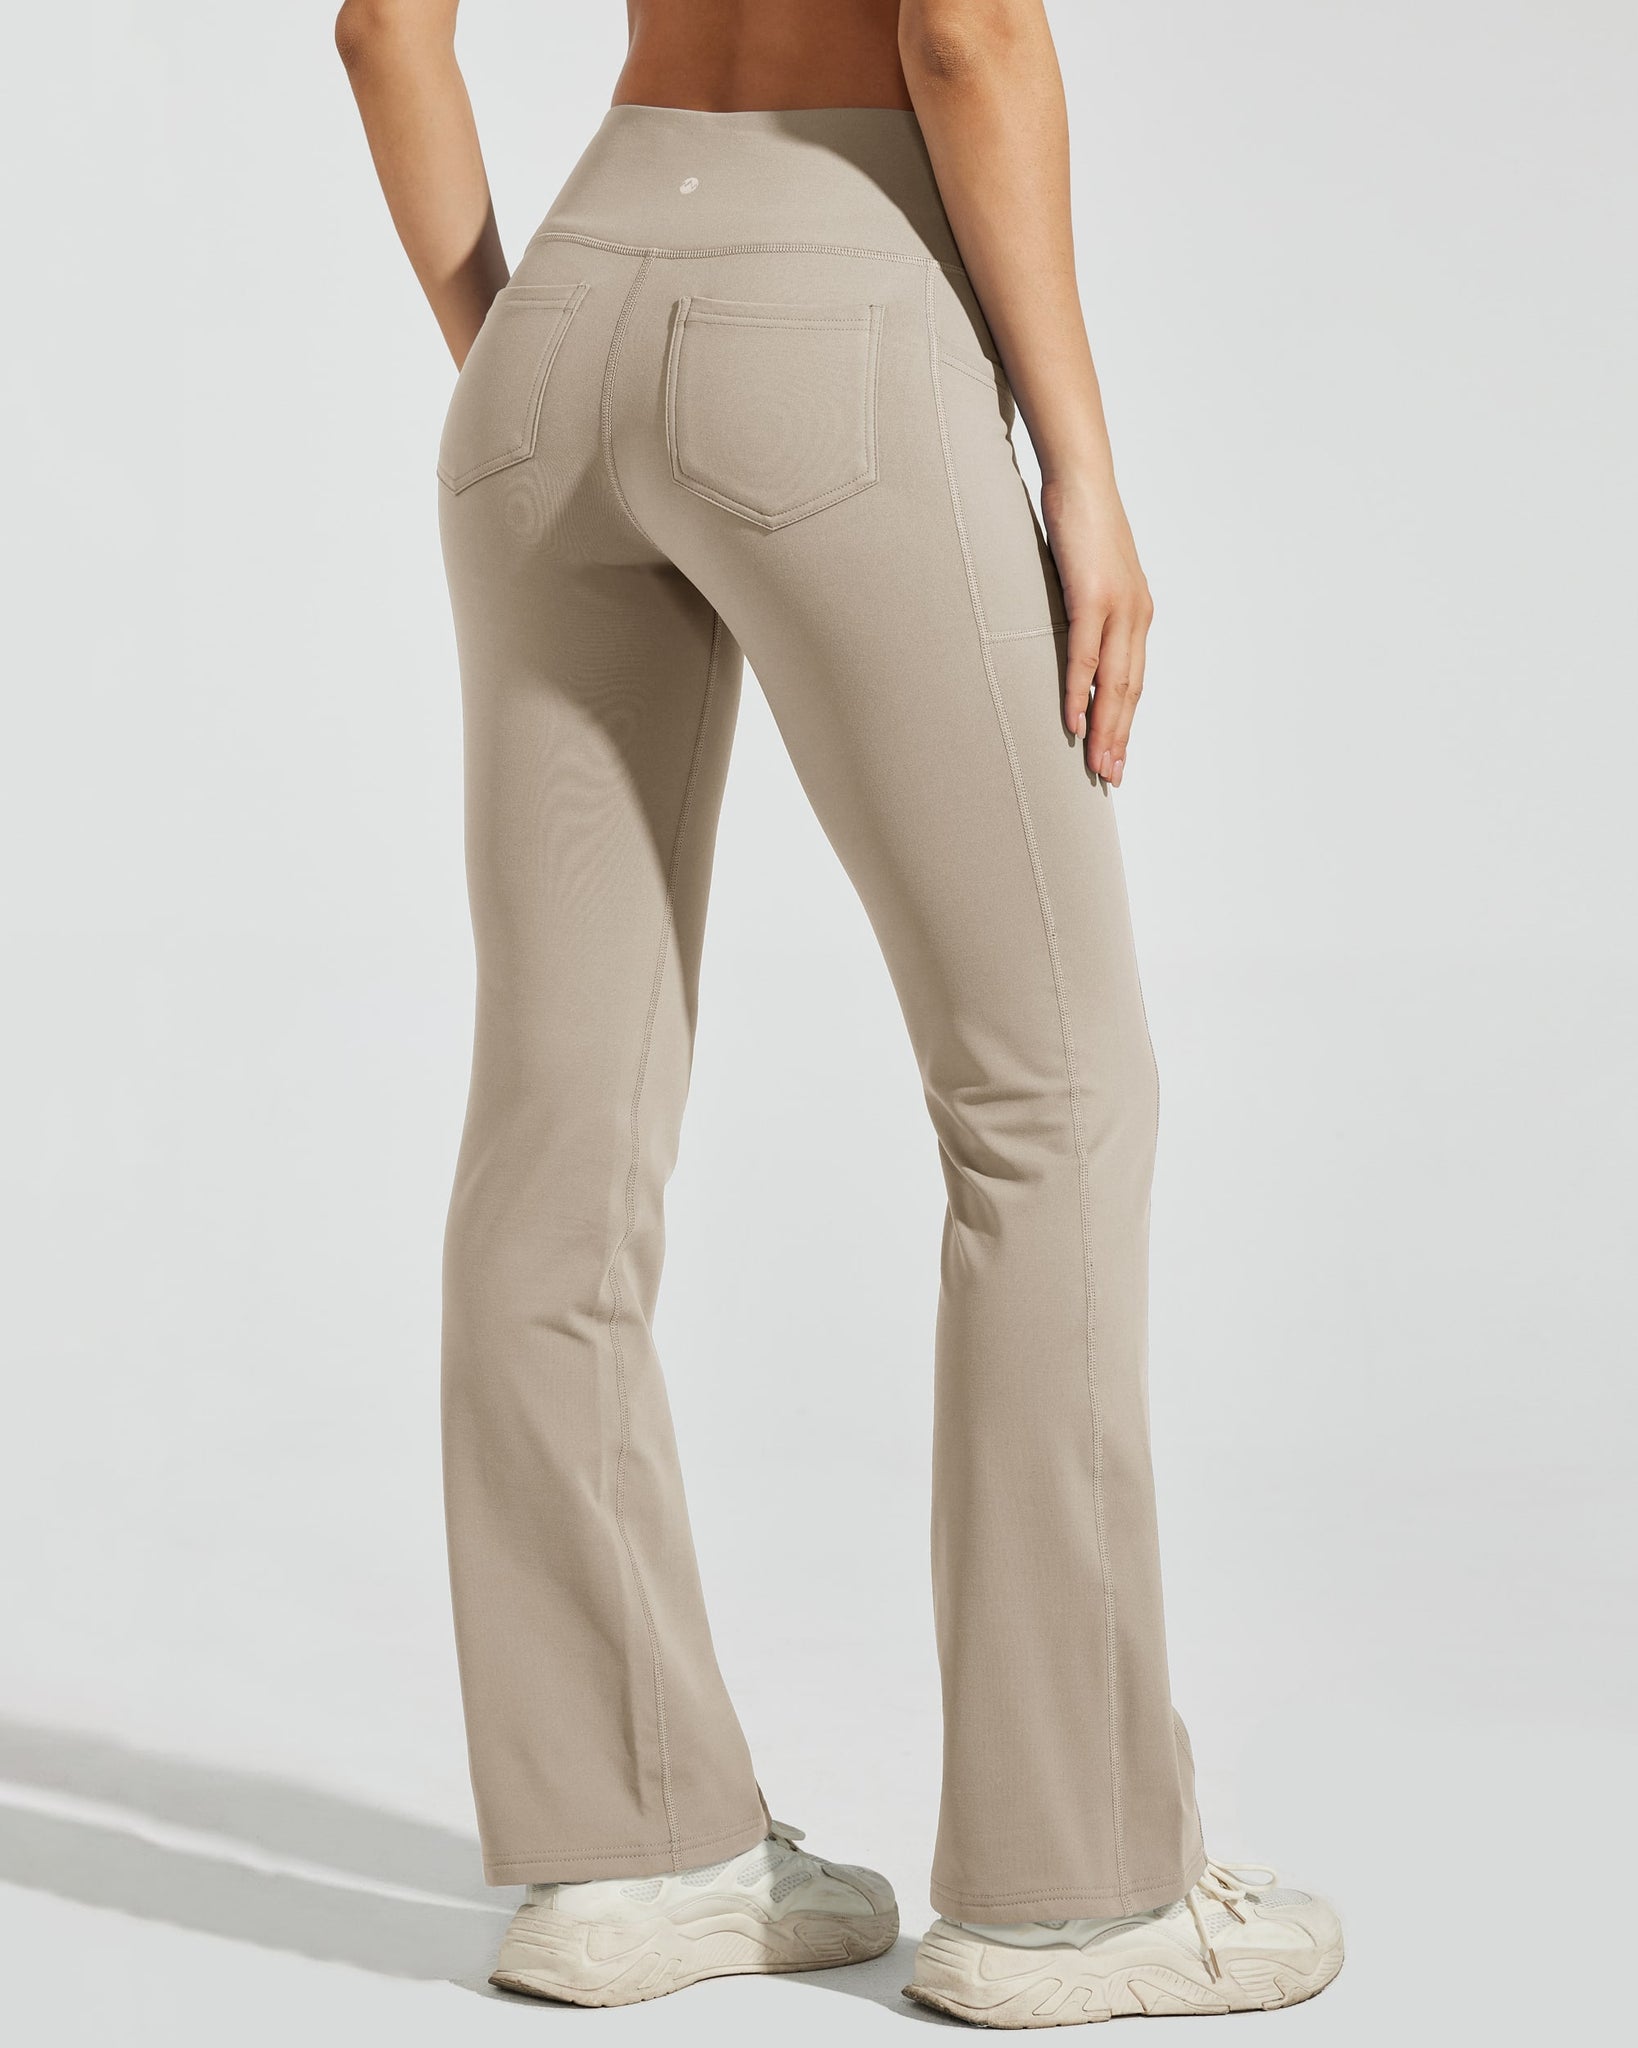 Women's Fleece Lined Bootcut Yoga Pants_Khaki_model2